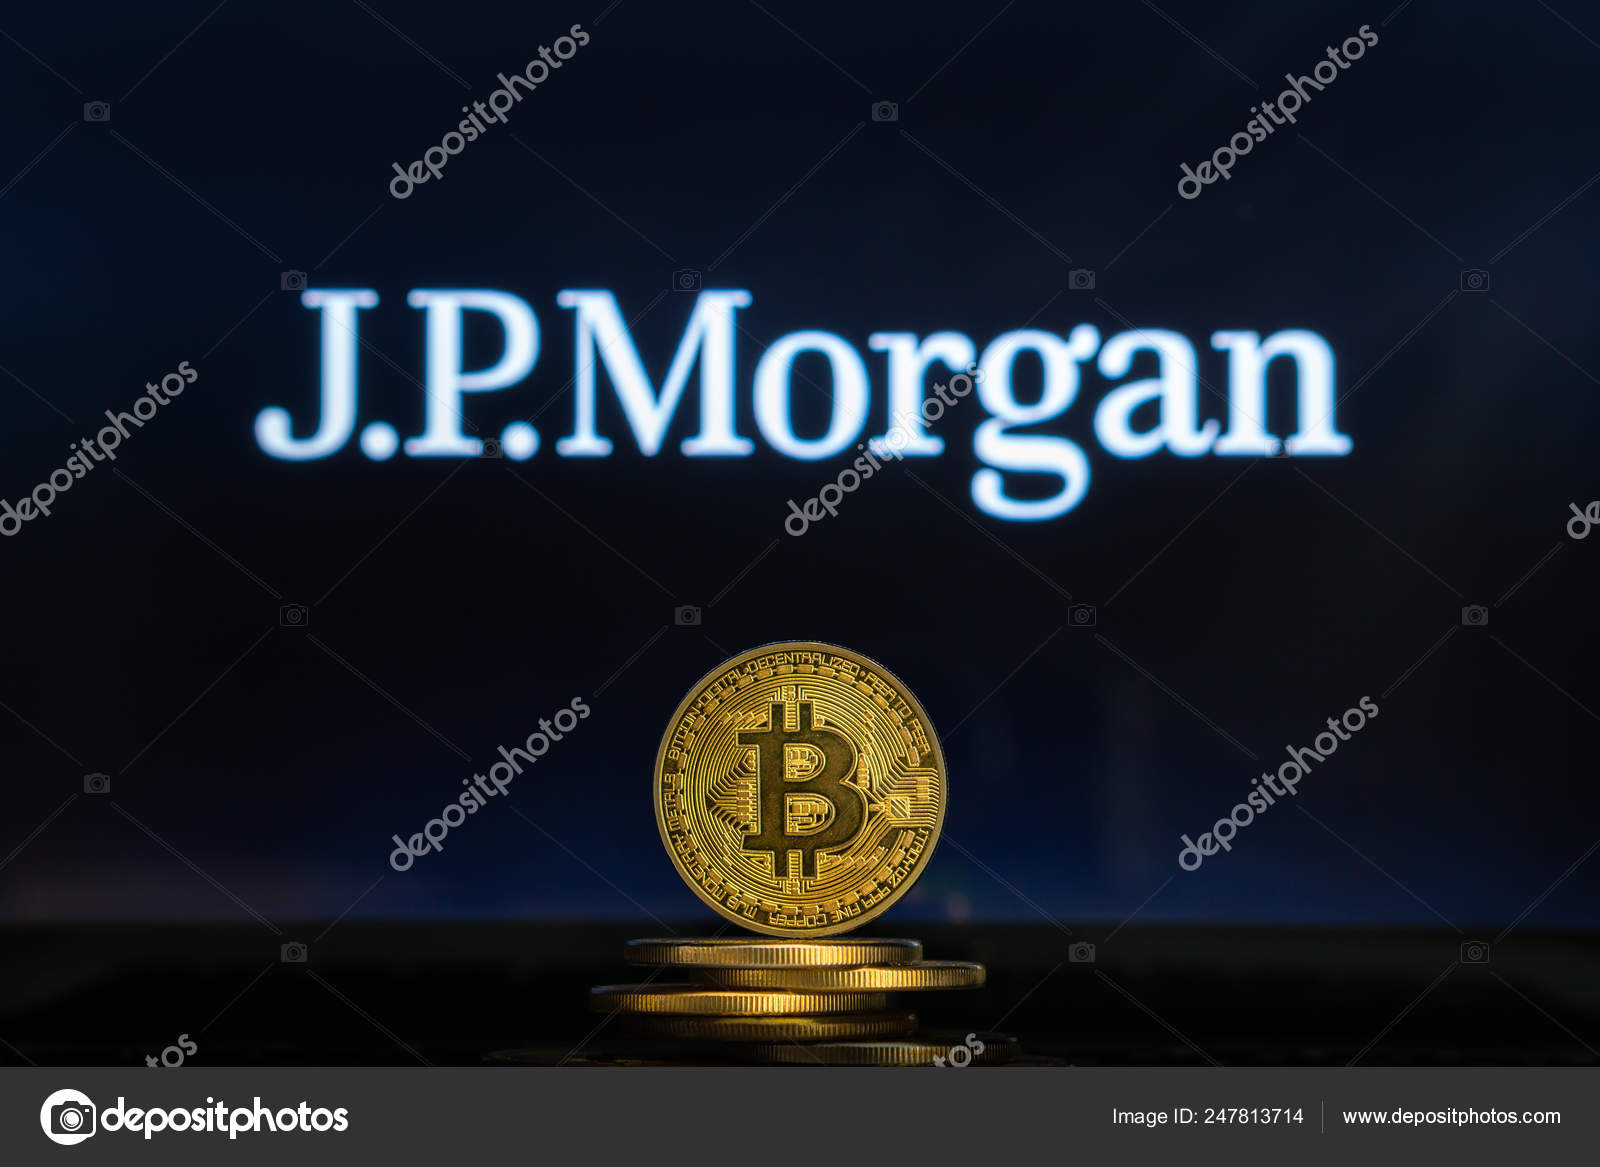 jpmorgan-investit-dans-crypto-et-blockchain